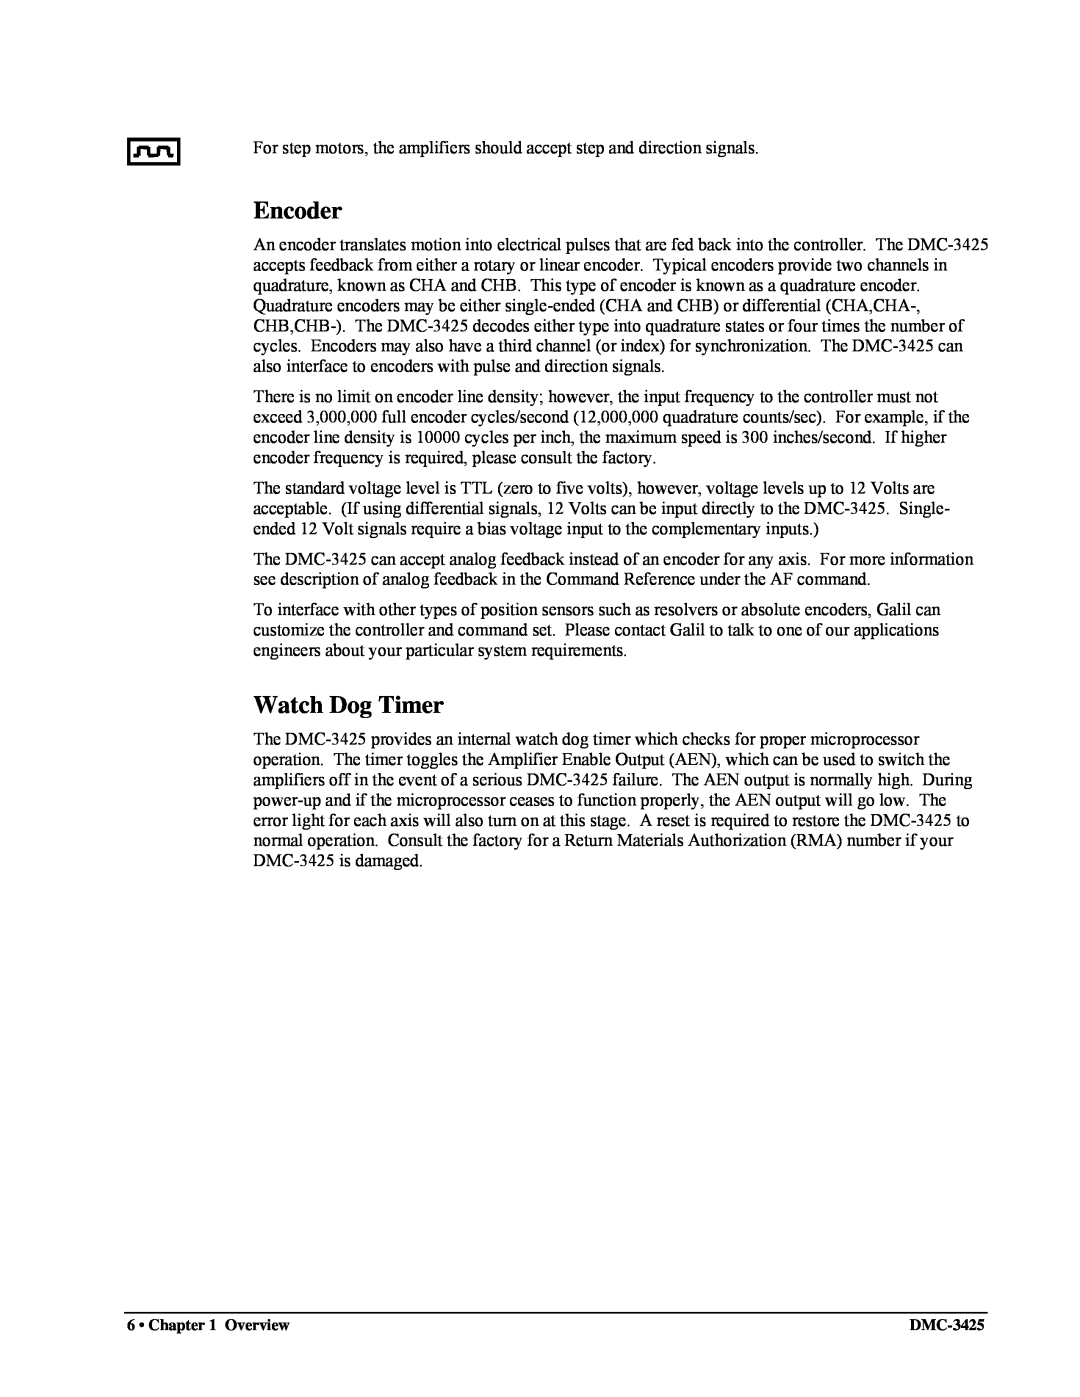 Galil DMC-3425 user manual Encoder, Watch Dog Timer, 6 • Overview 